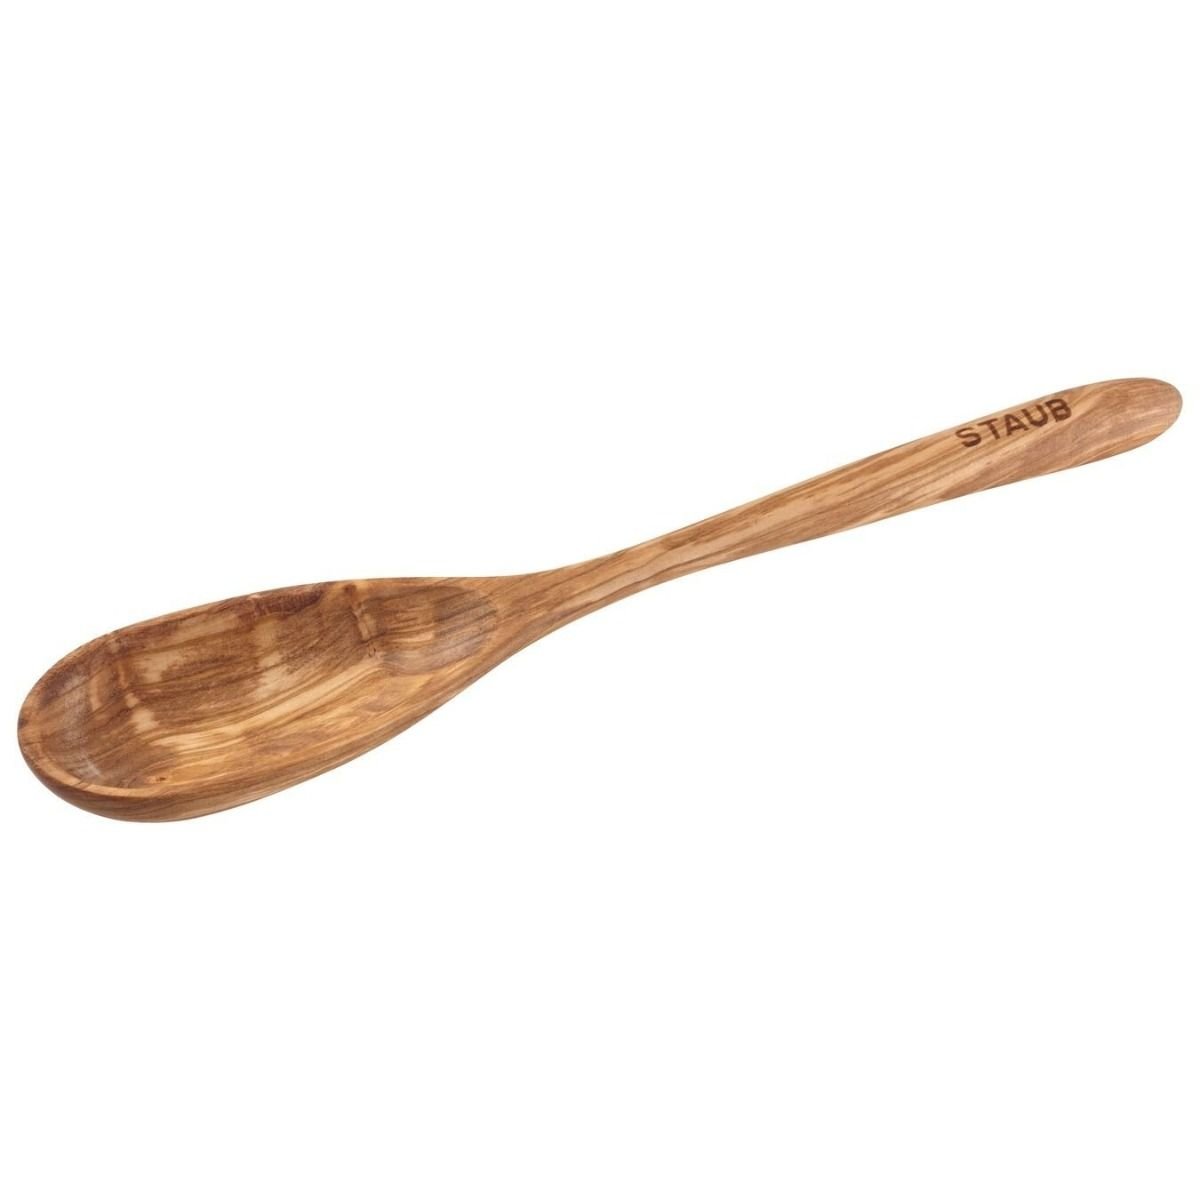 OXO 1130780 Good Grips Wooden Spoon Set, 3-Piece,Brown